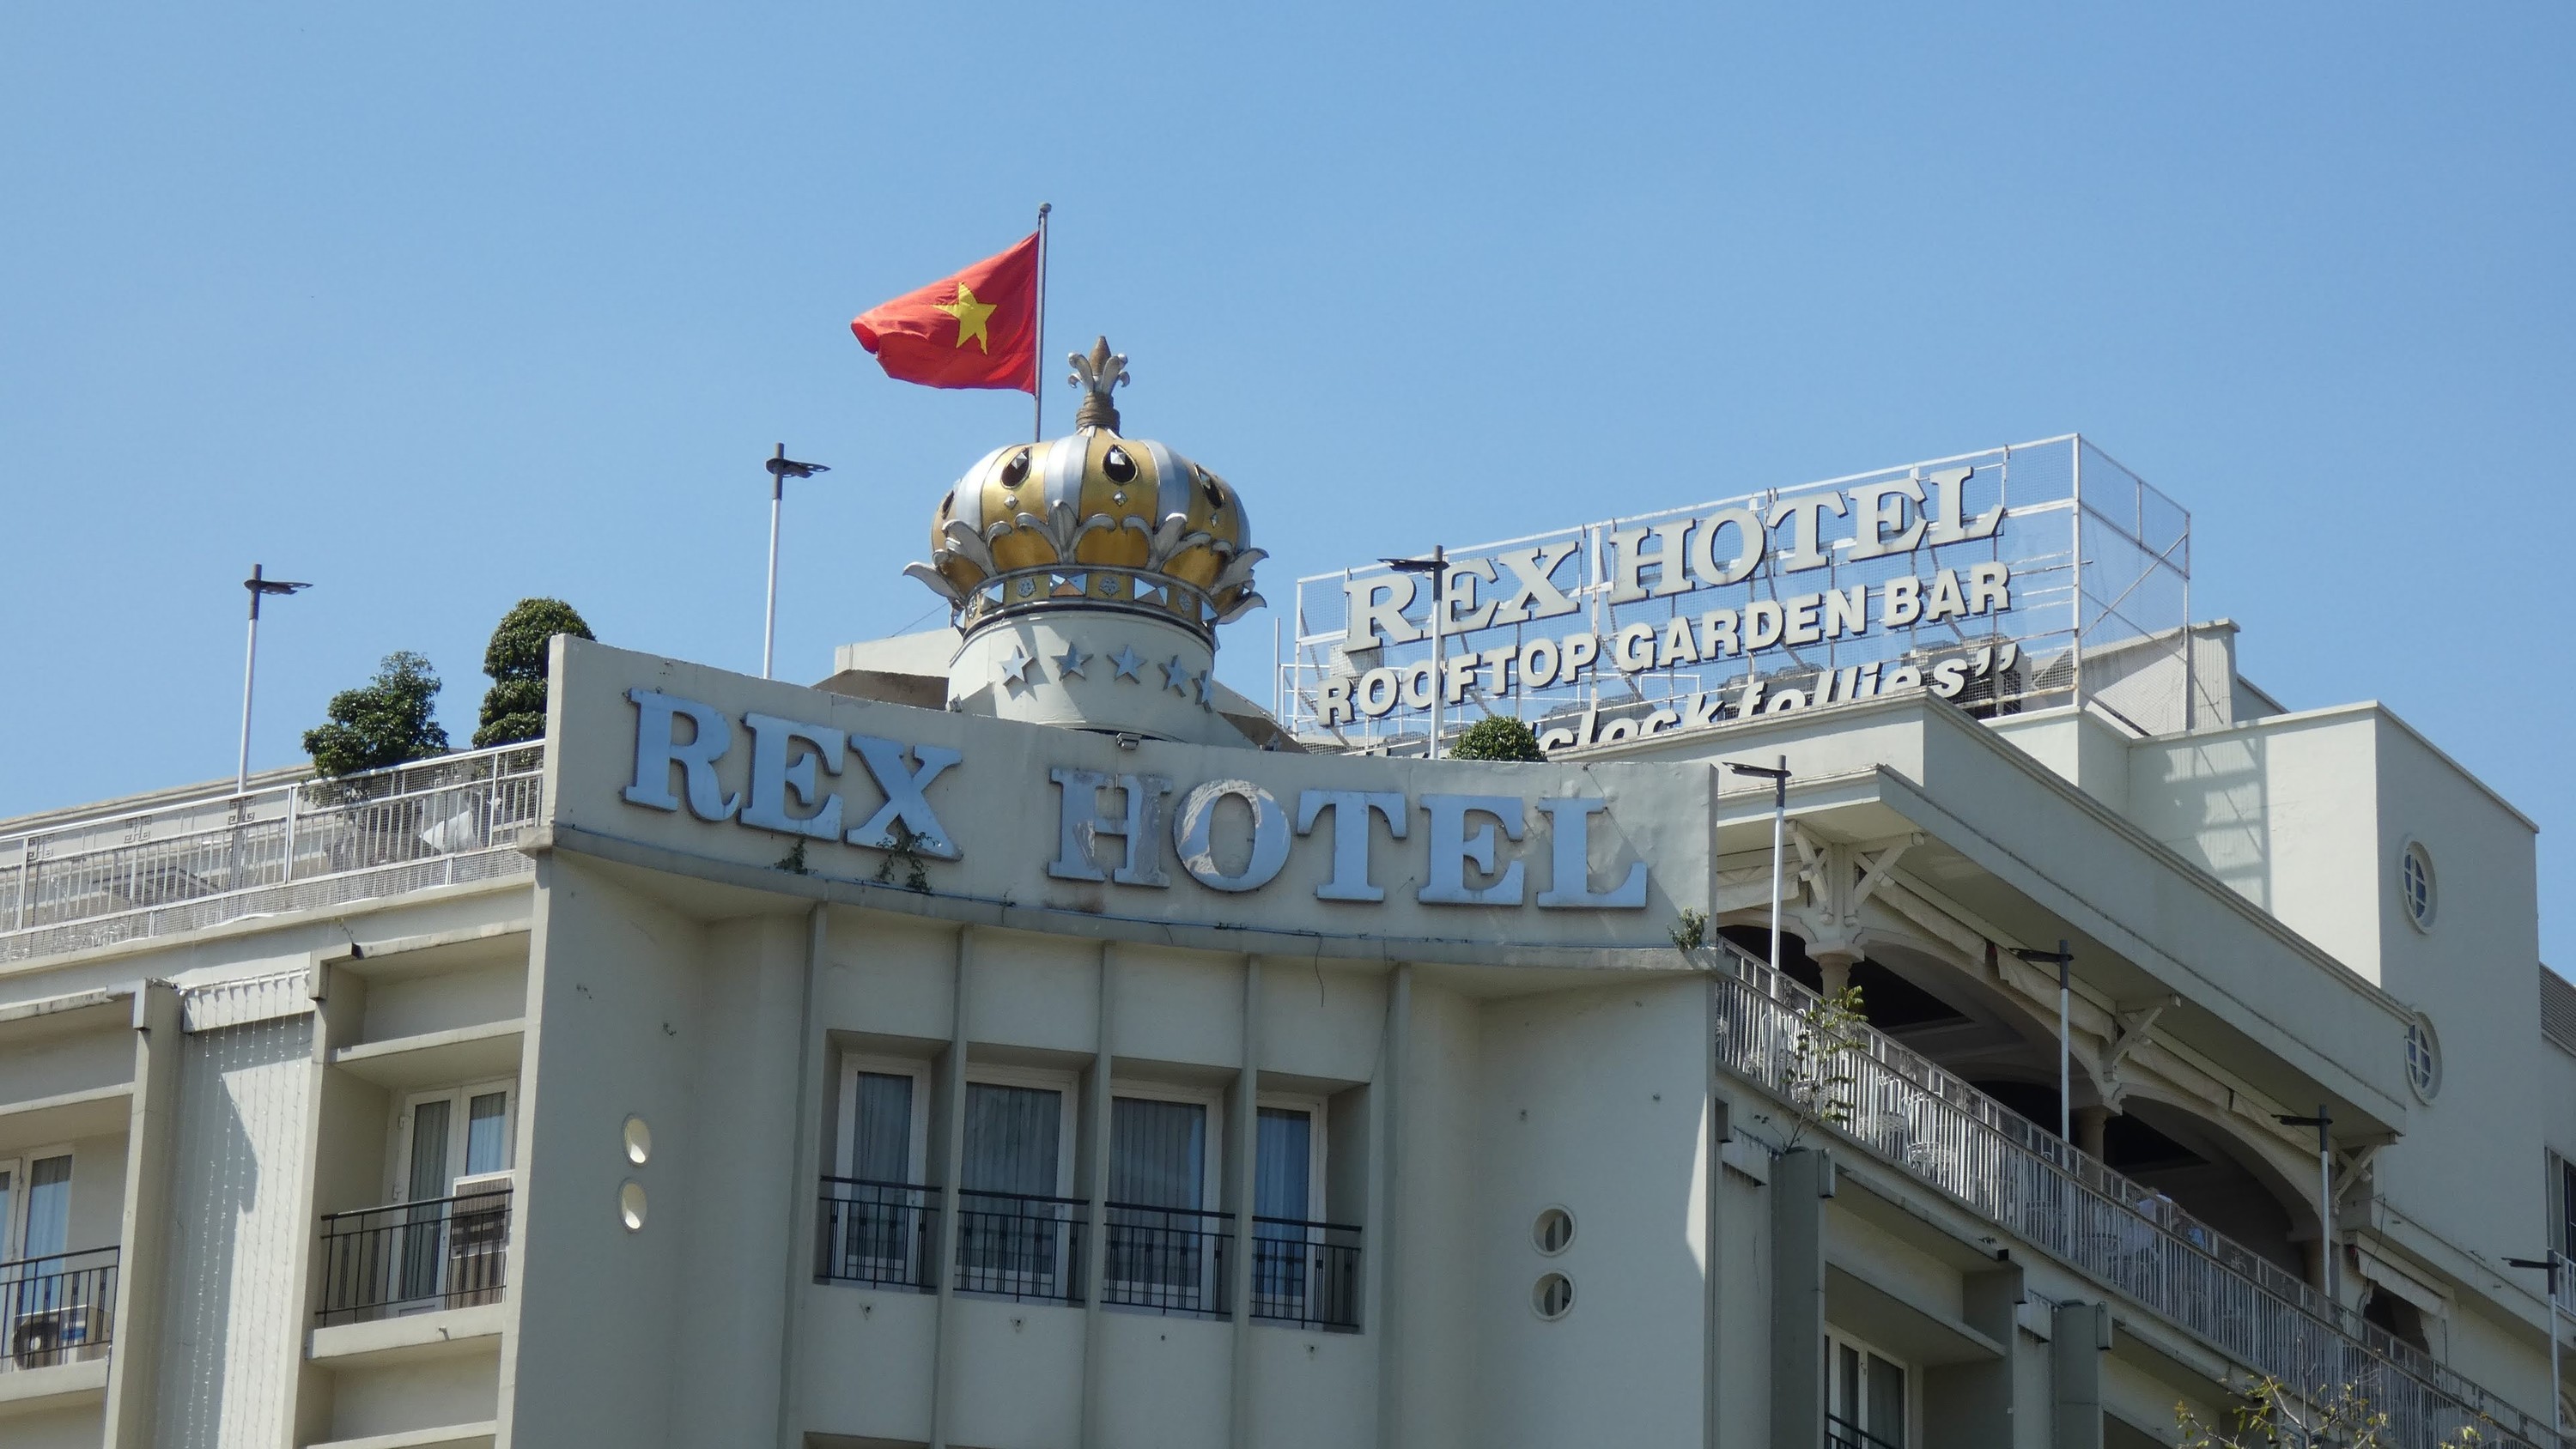 Rex Hotel in Saigon